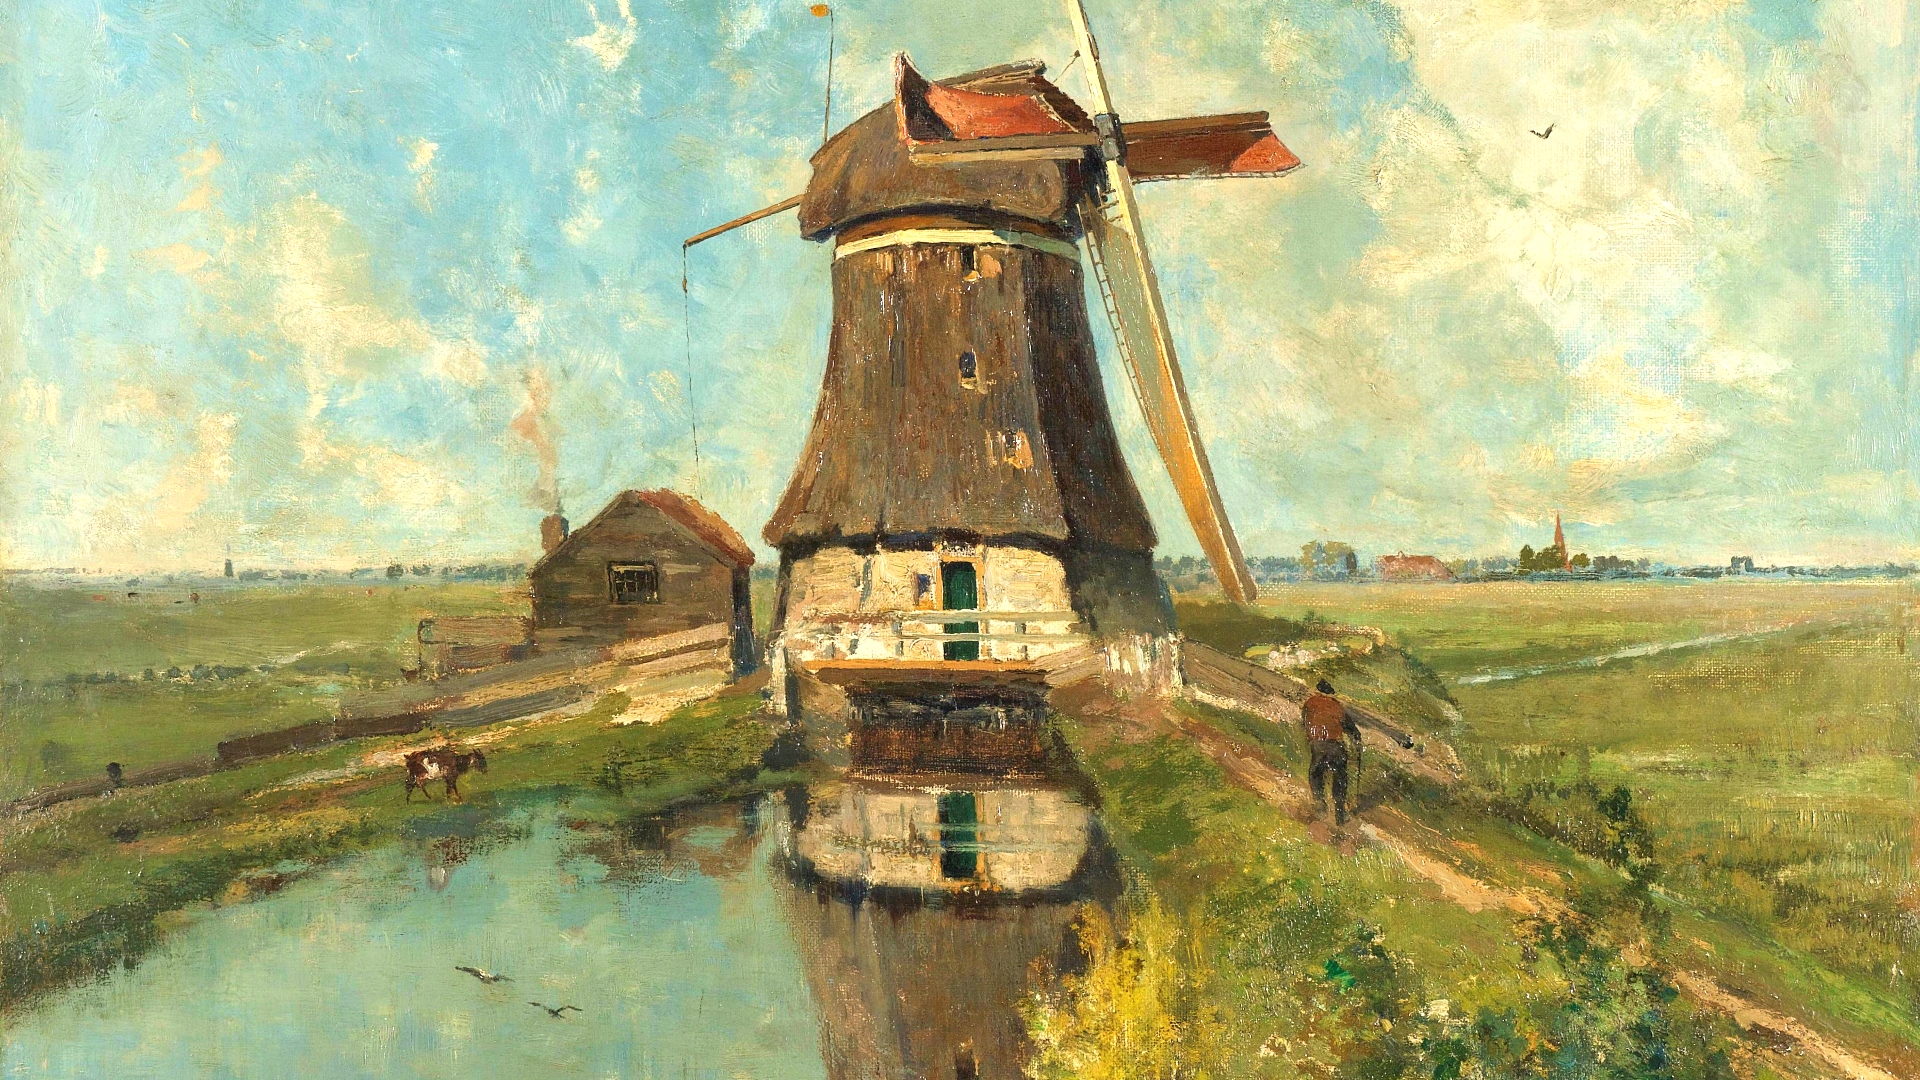 Painting Classical Art Landscape Windmill Paul Gabriel Artwork 1920x1080